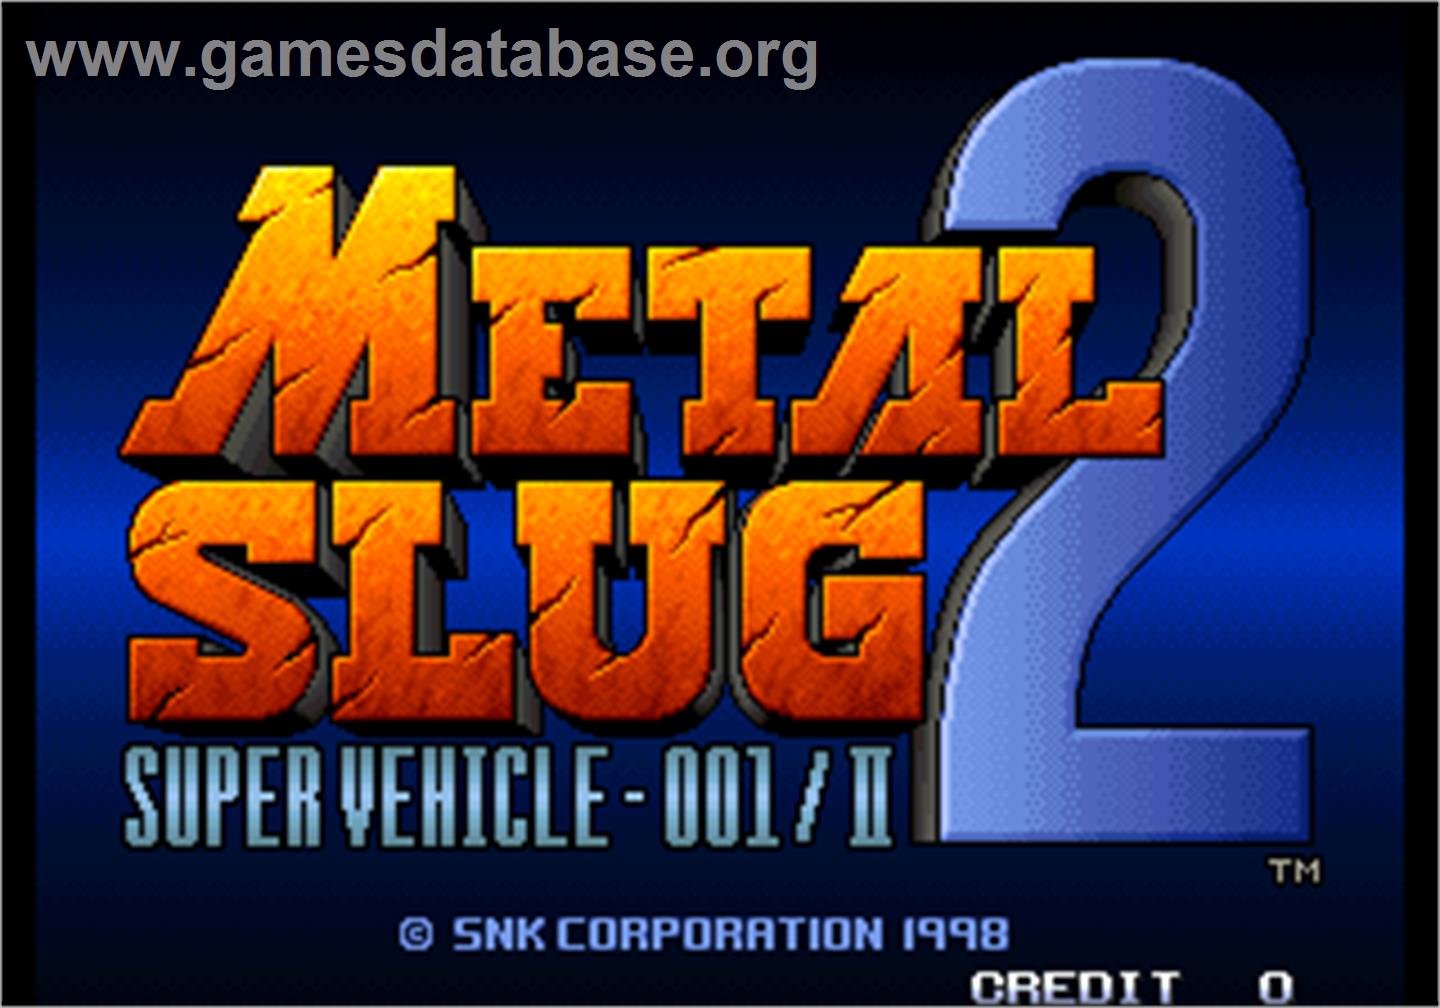 Metal Slug 2 - Super Vehicle-001/II - Arcade - Artwork - Title Screen